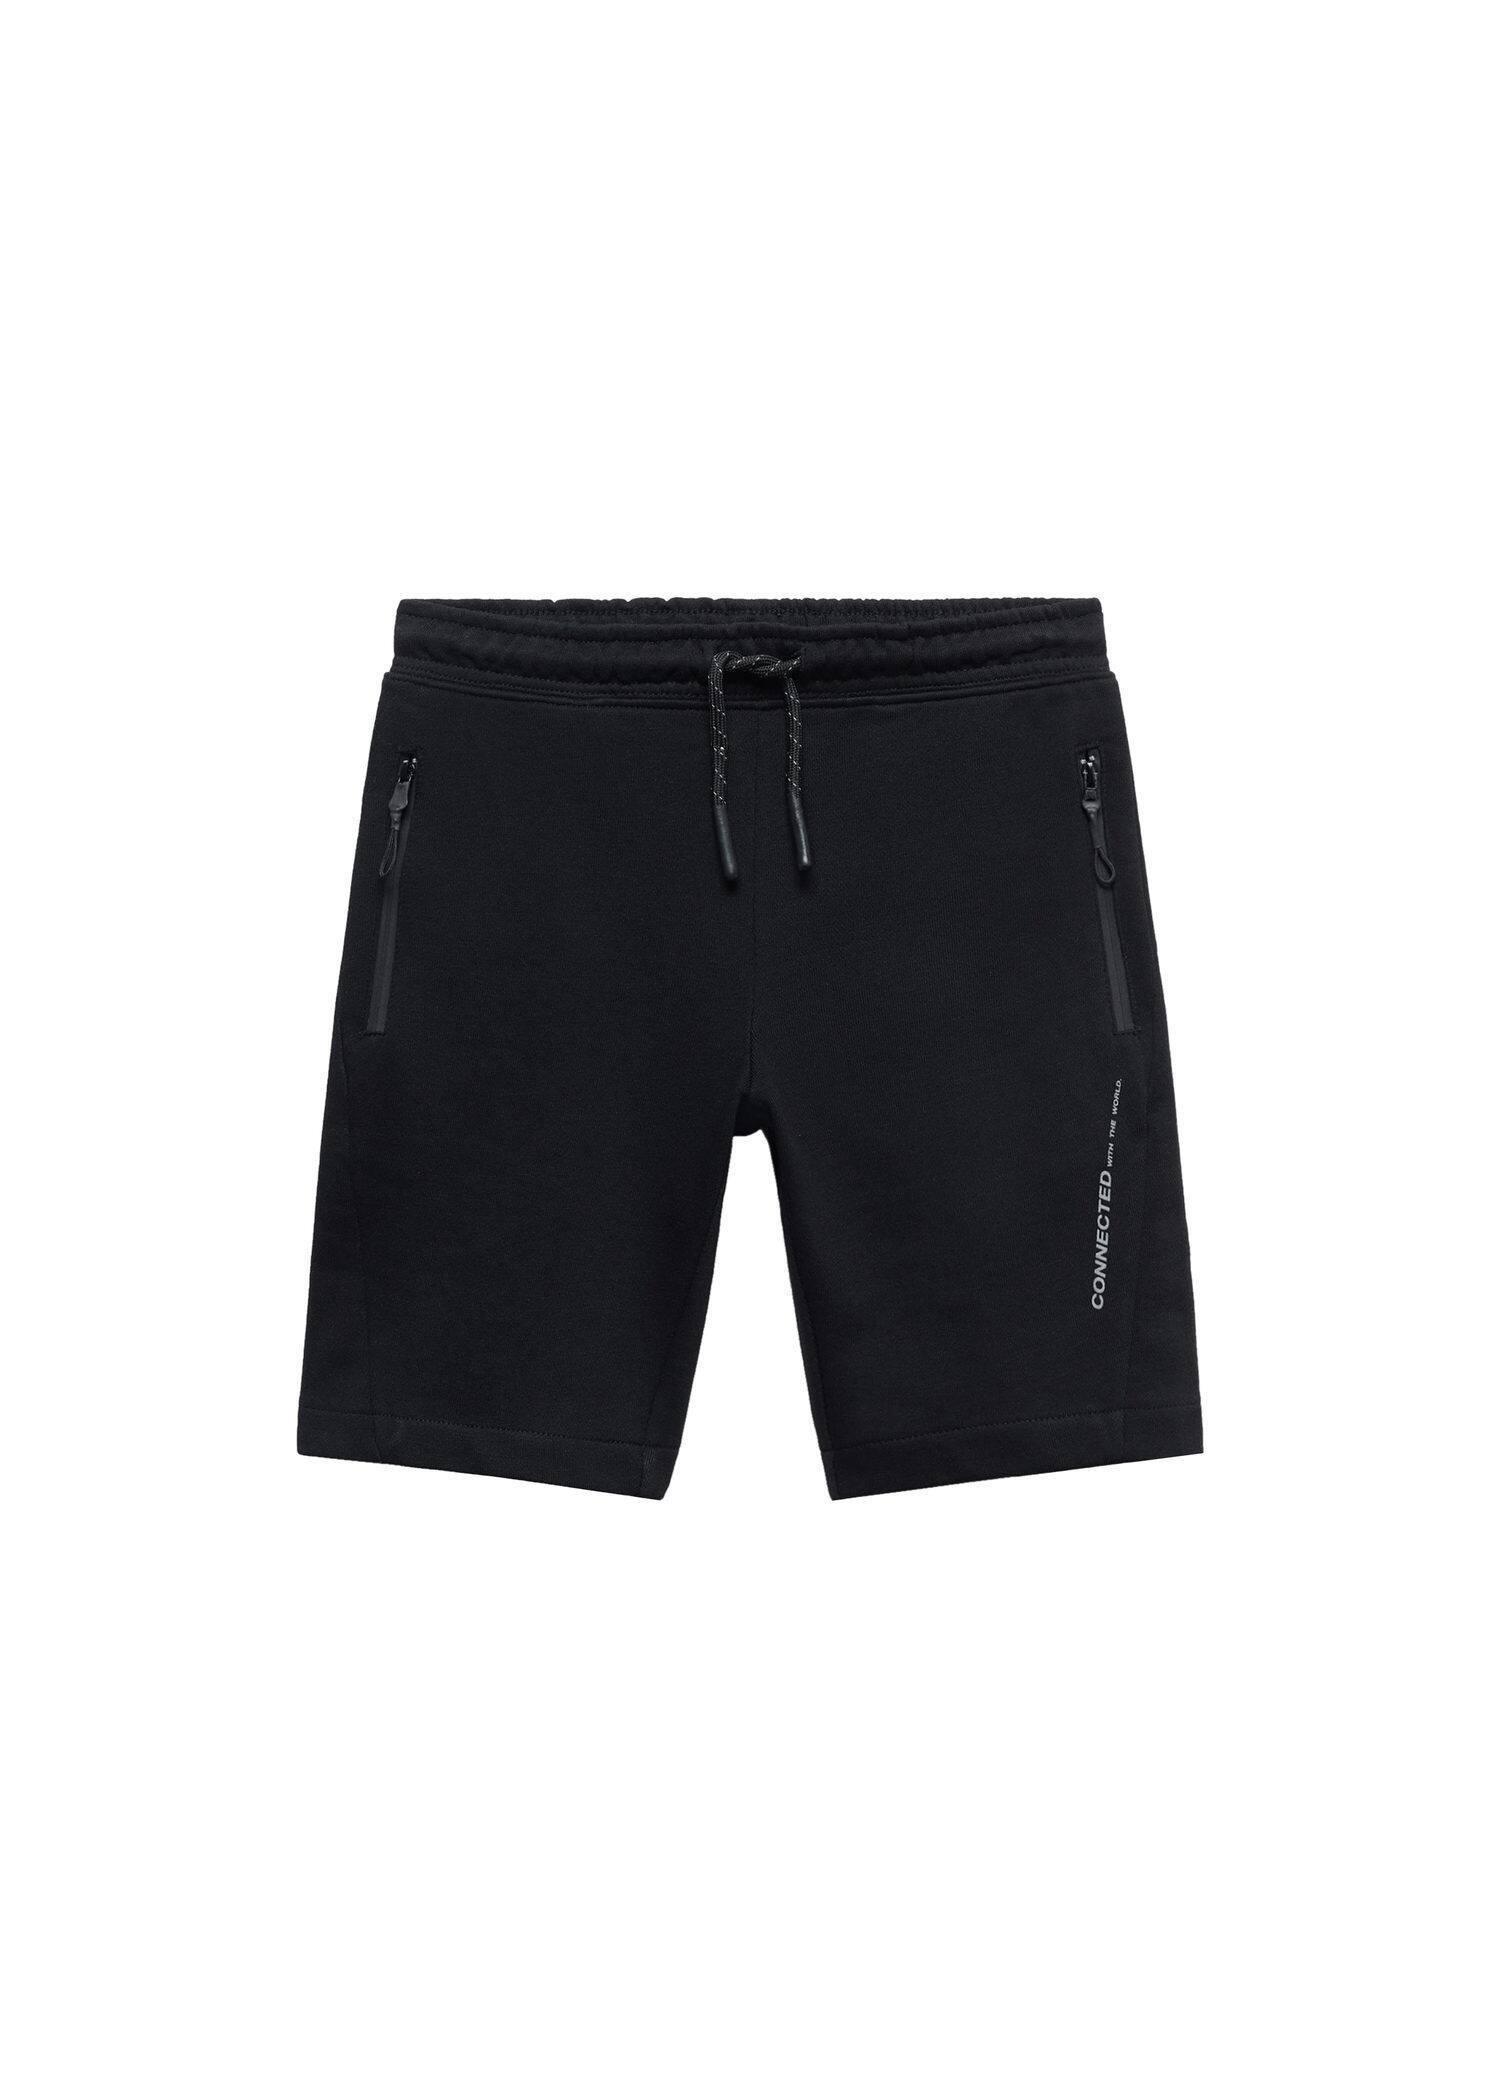 Mango - Black Elastic Waist Bermuda Shorts, Kids Boys